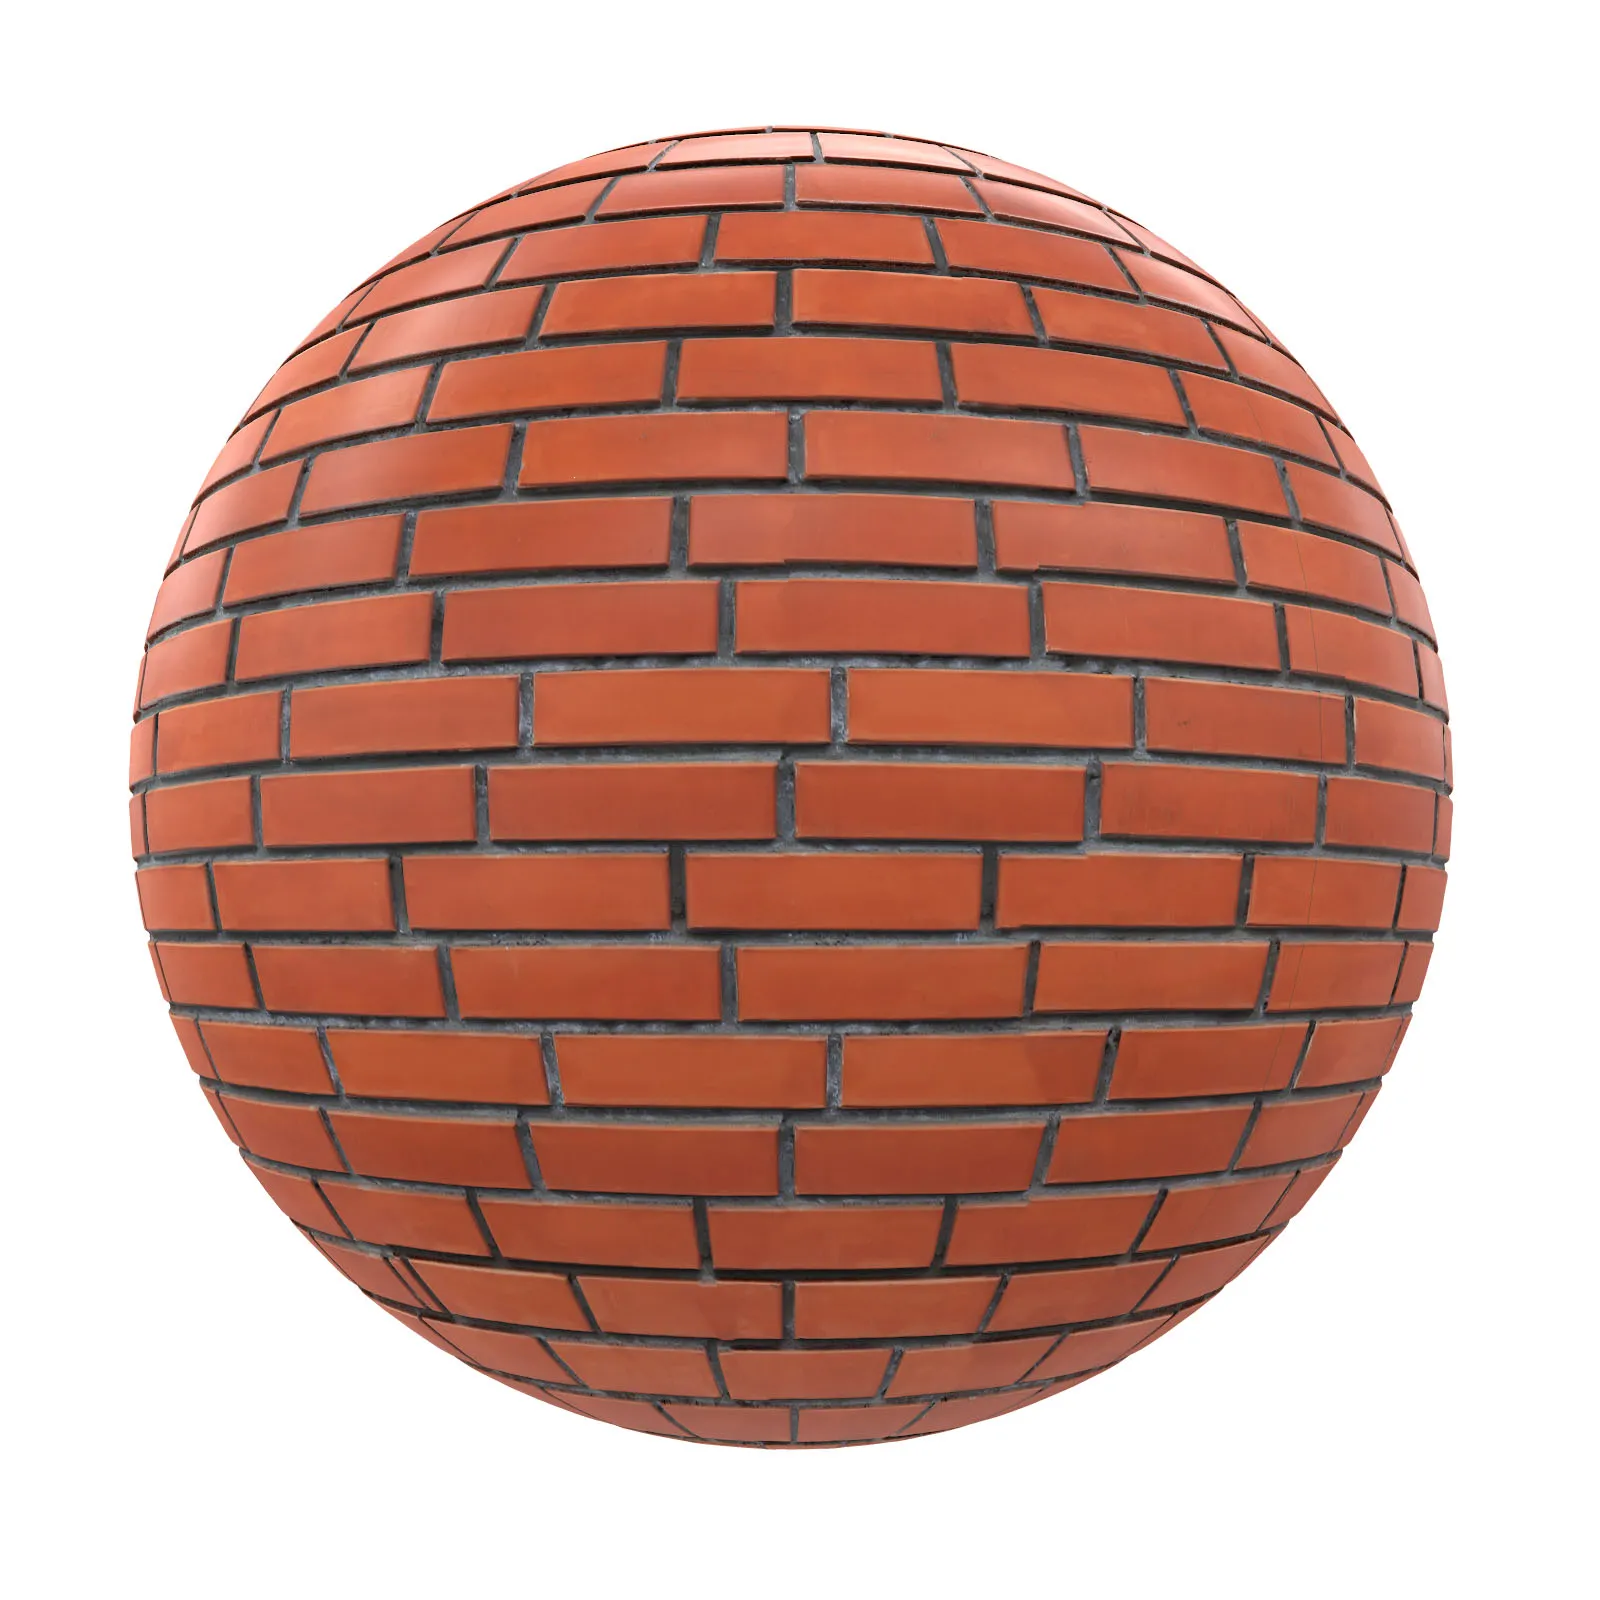 PBR CGAXIS TEXTURES – BRICK – Red Brick Wall 12